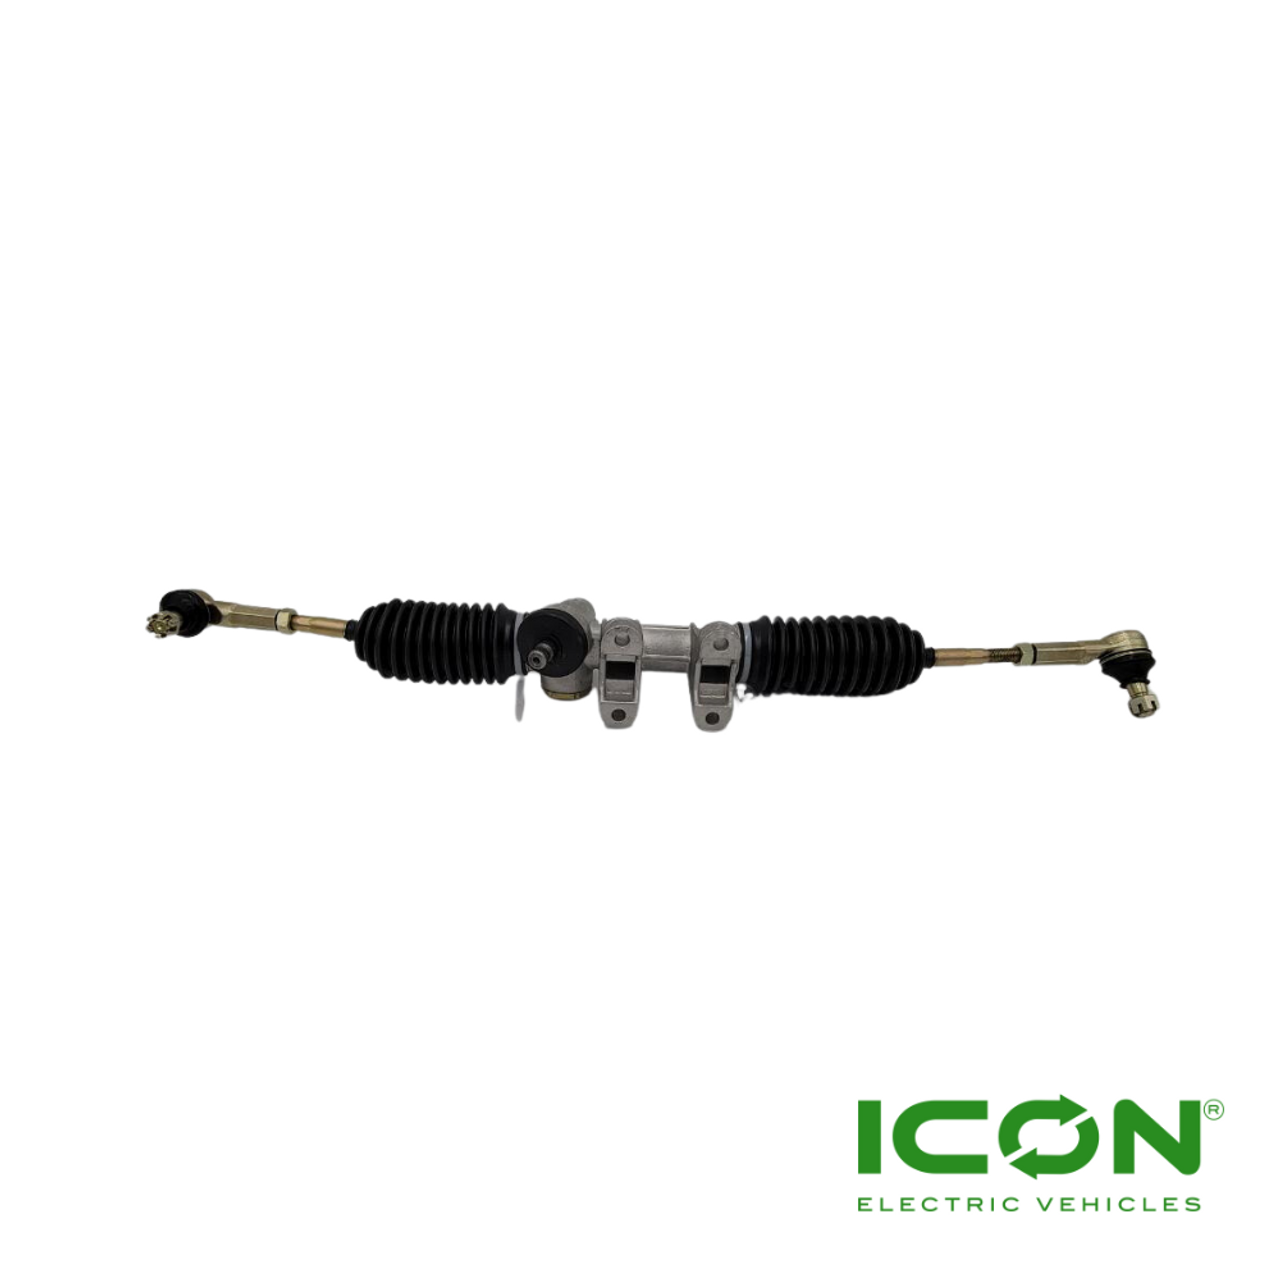 Steering Rack for ICON i40L, i40FL, i60L Golf Cart (Lifted Models Only), SR-301-IC, 3.01.004.070125, 3.206.01.000021